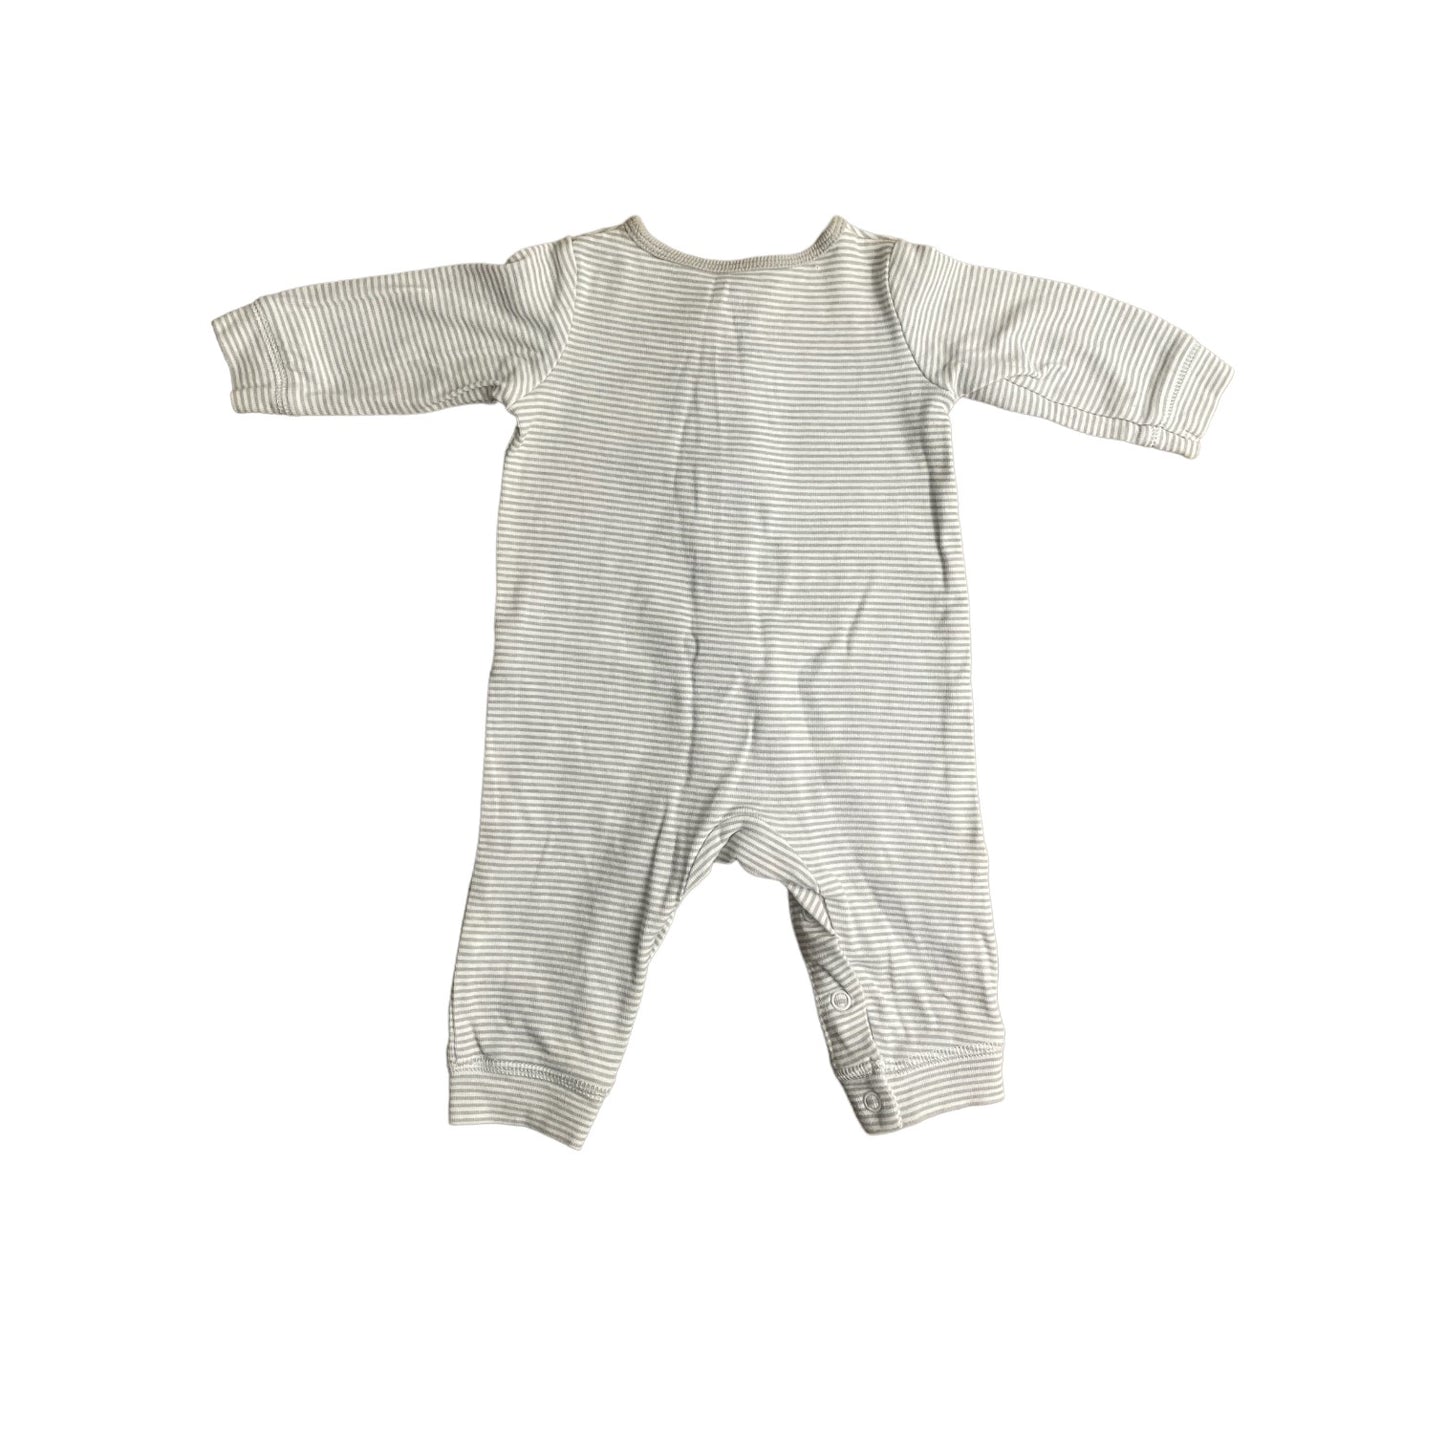 Carter's Long Sleeve Onesie Pajamas 0-3 months